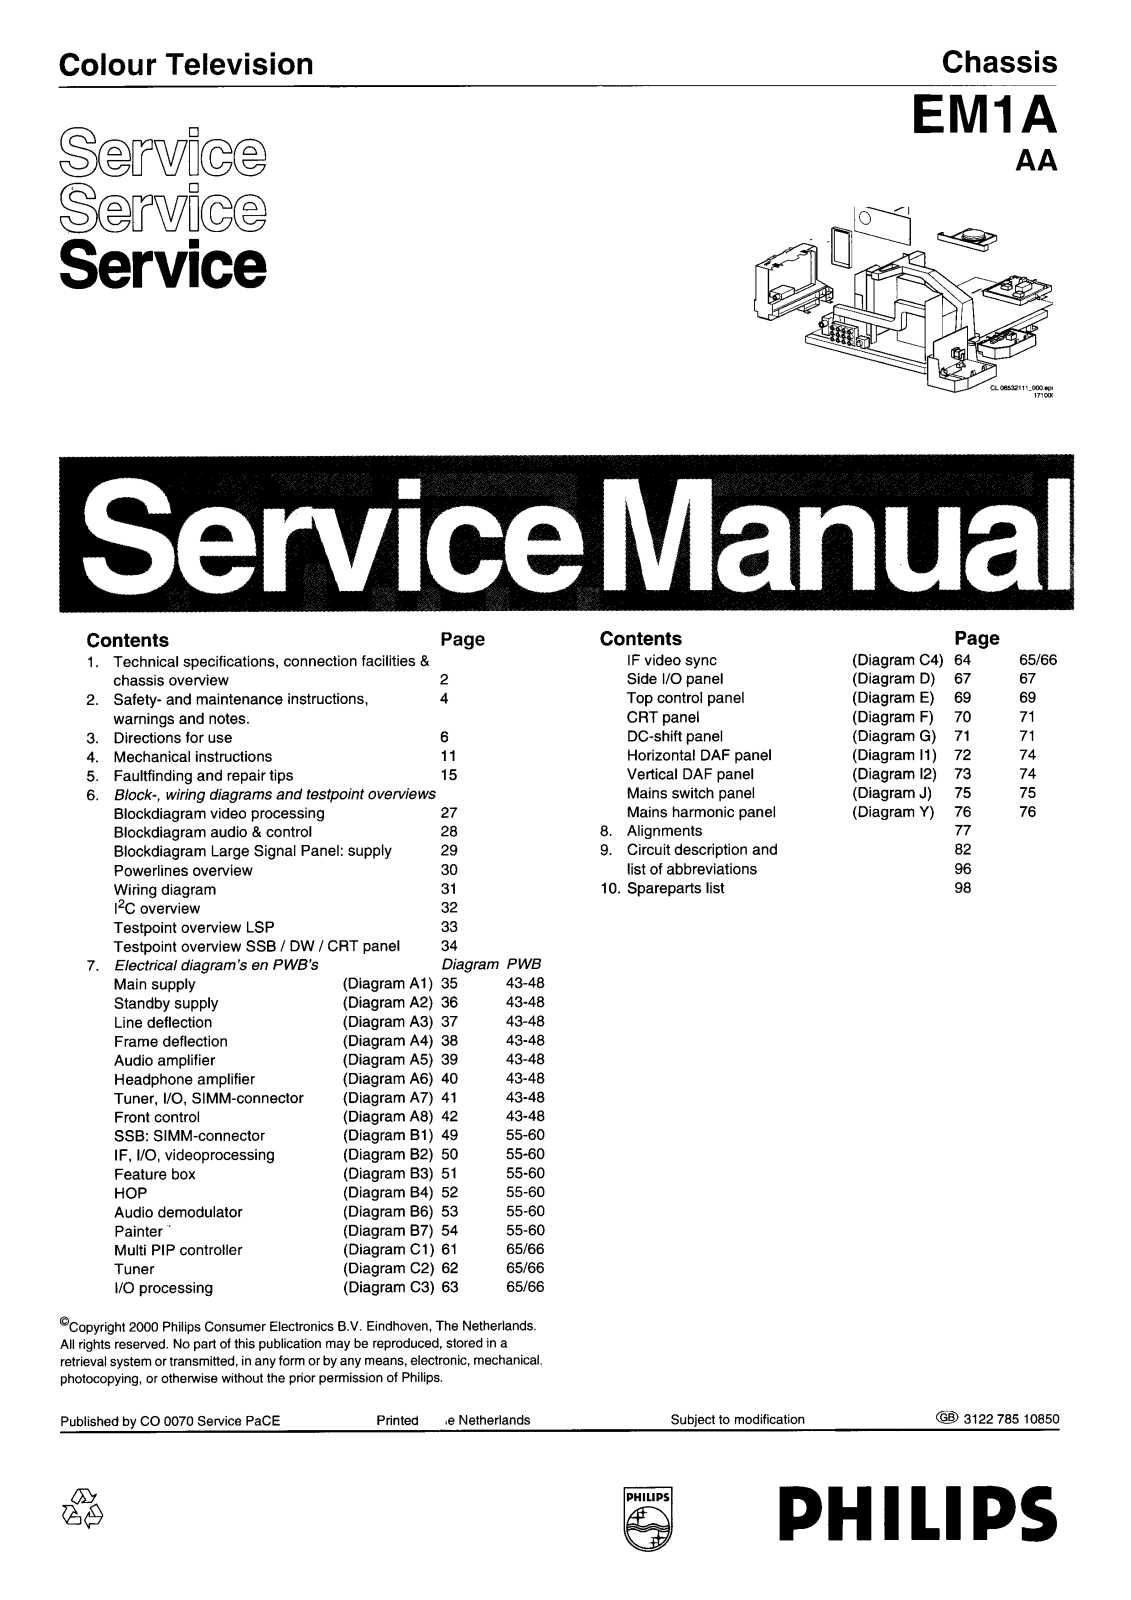 Philips EM1A Service Manual